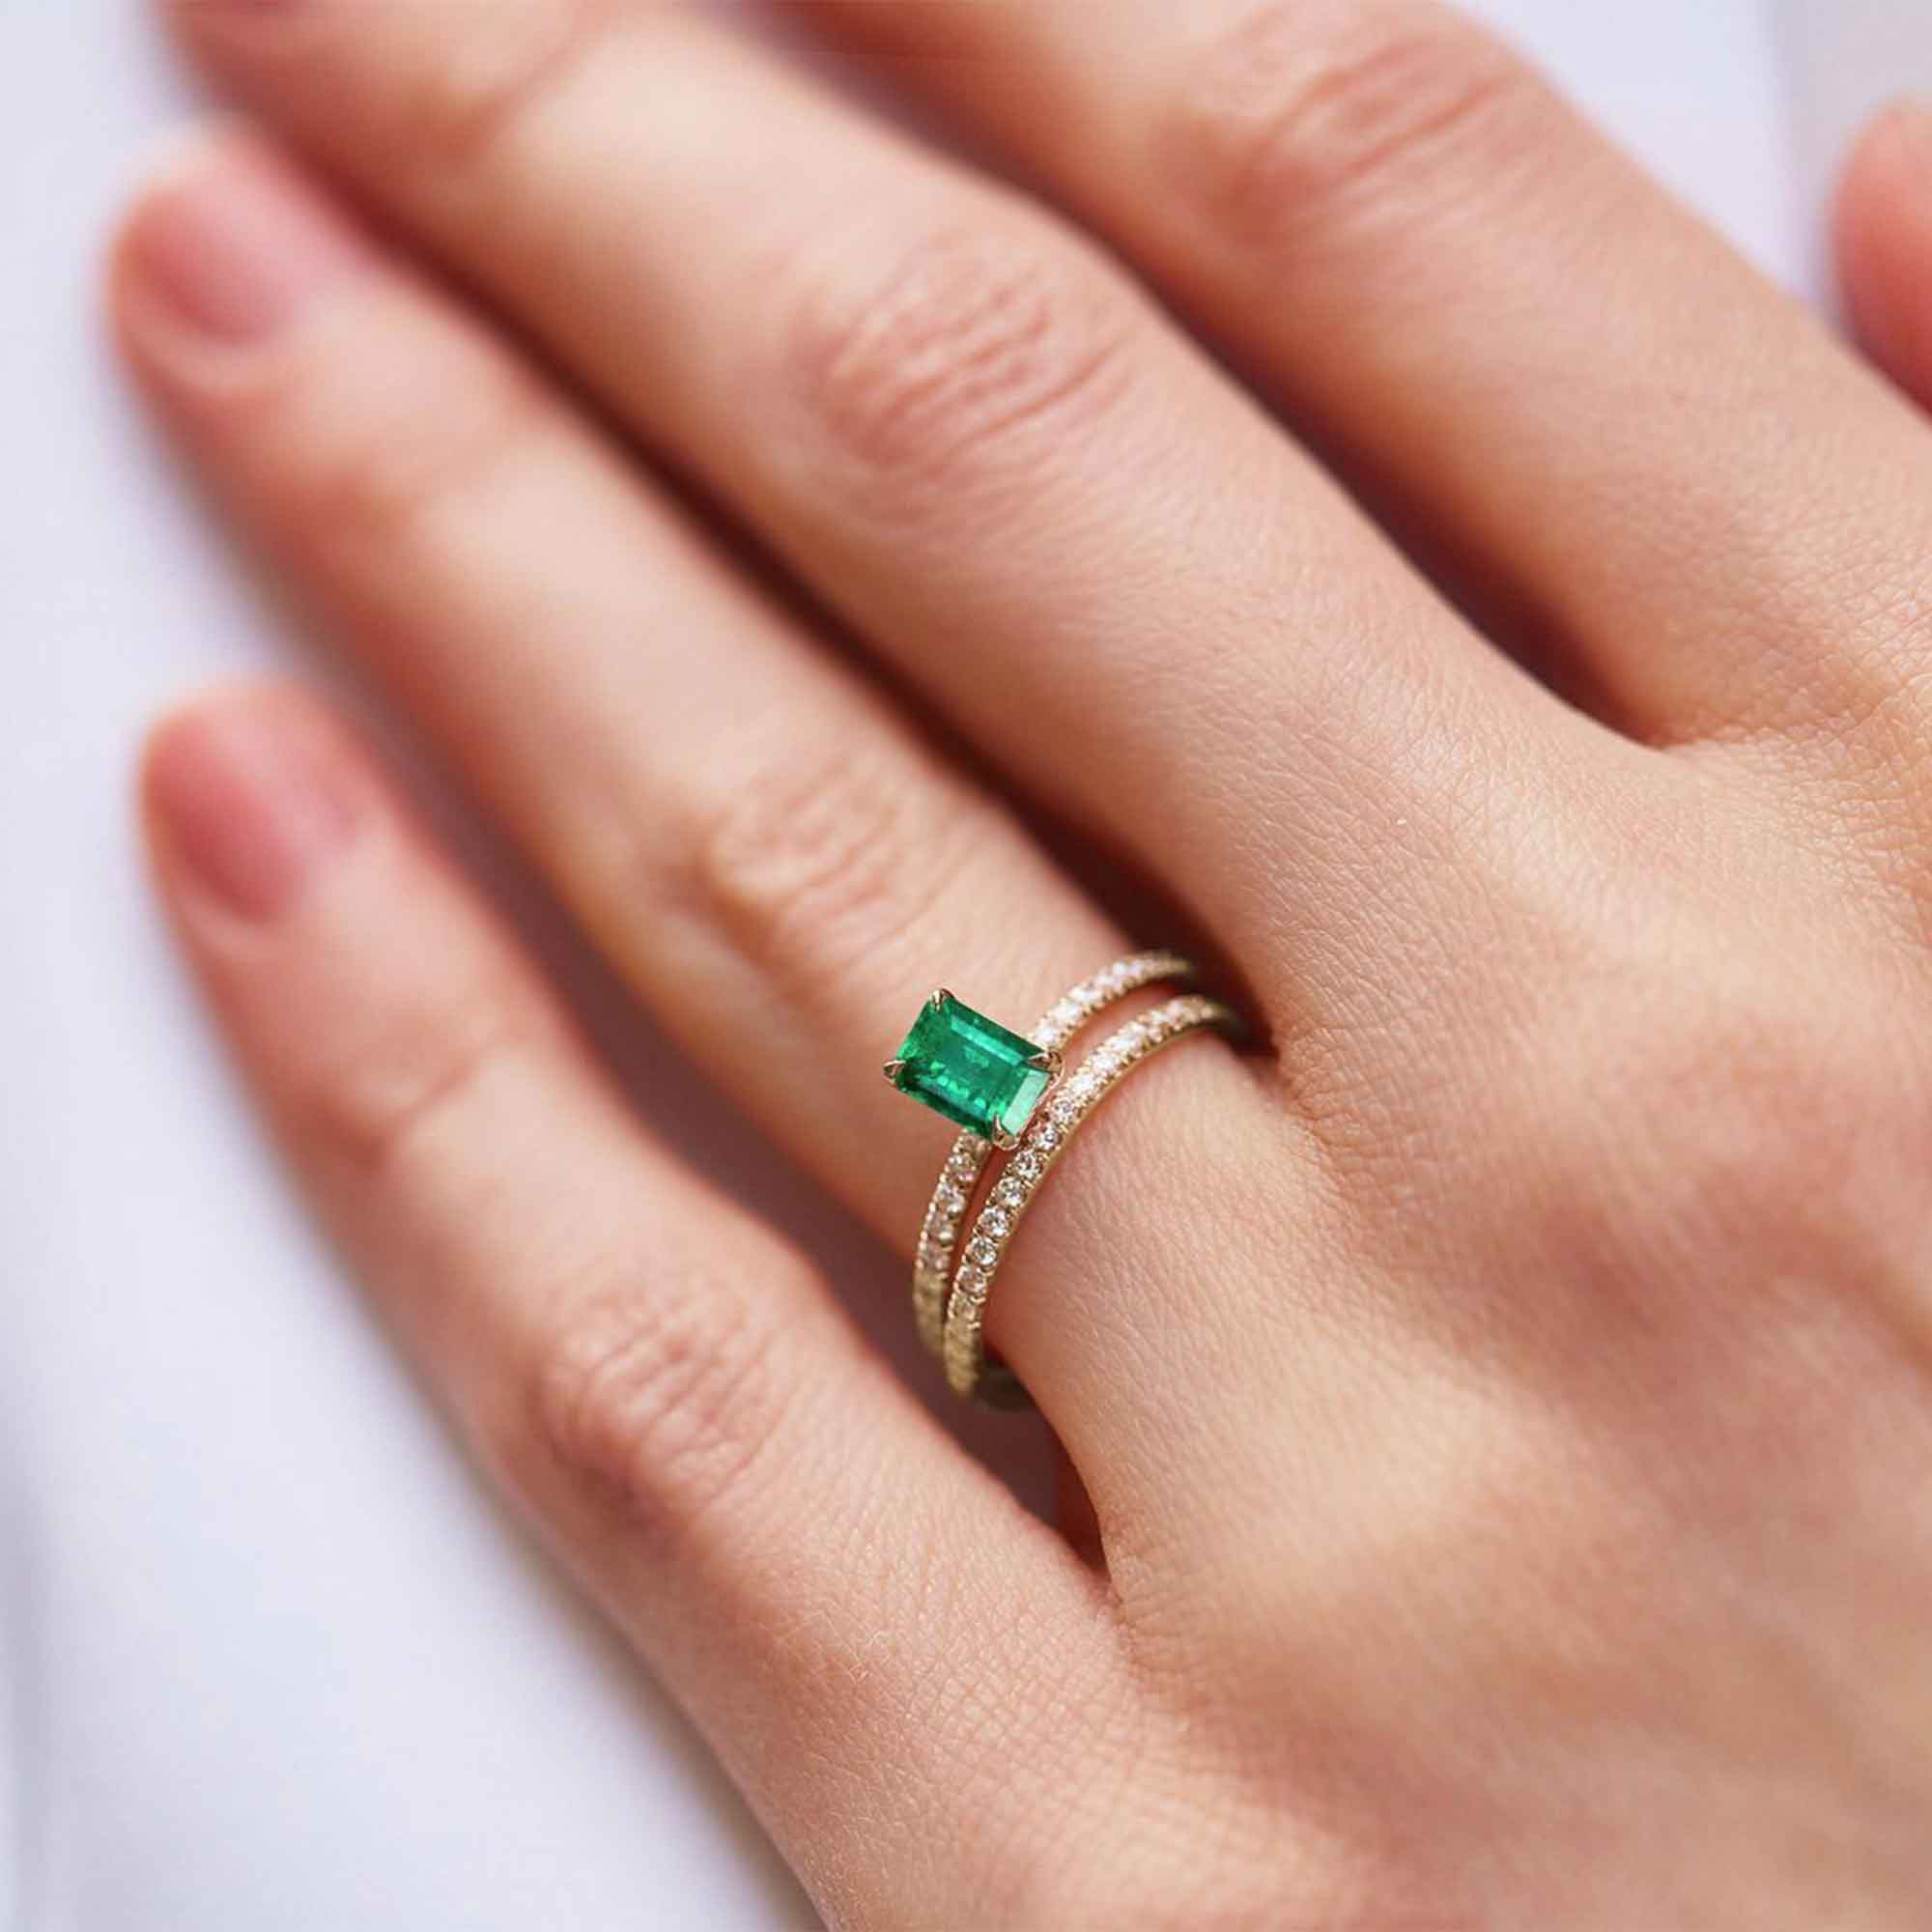 Die grüne Eleganz: moderne Verlobungsringe mit Smaragden